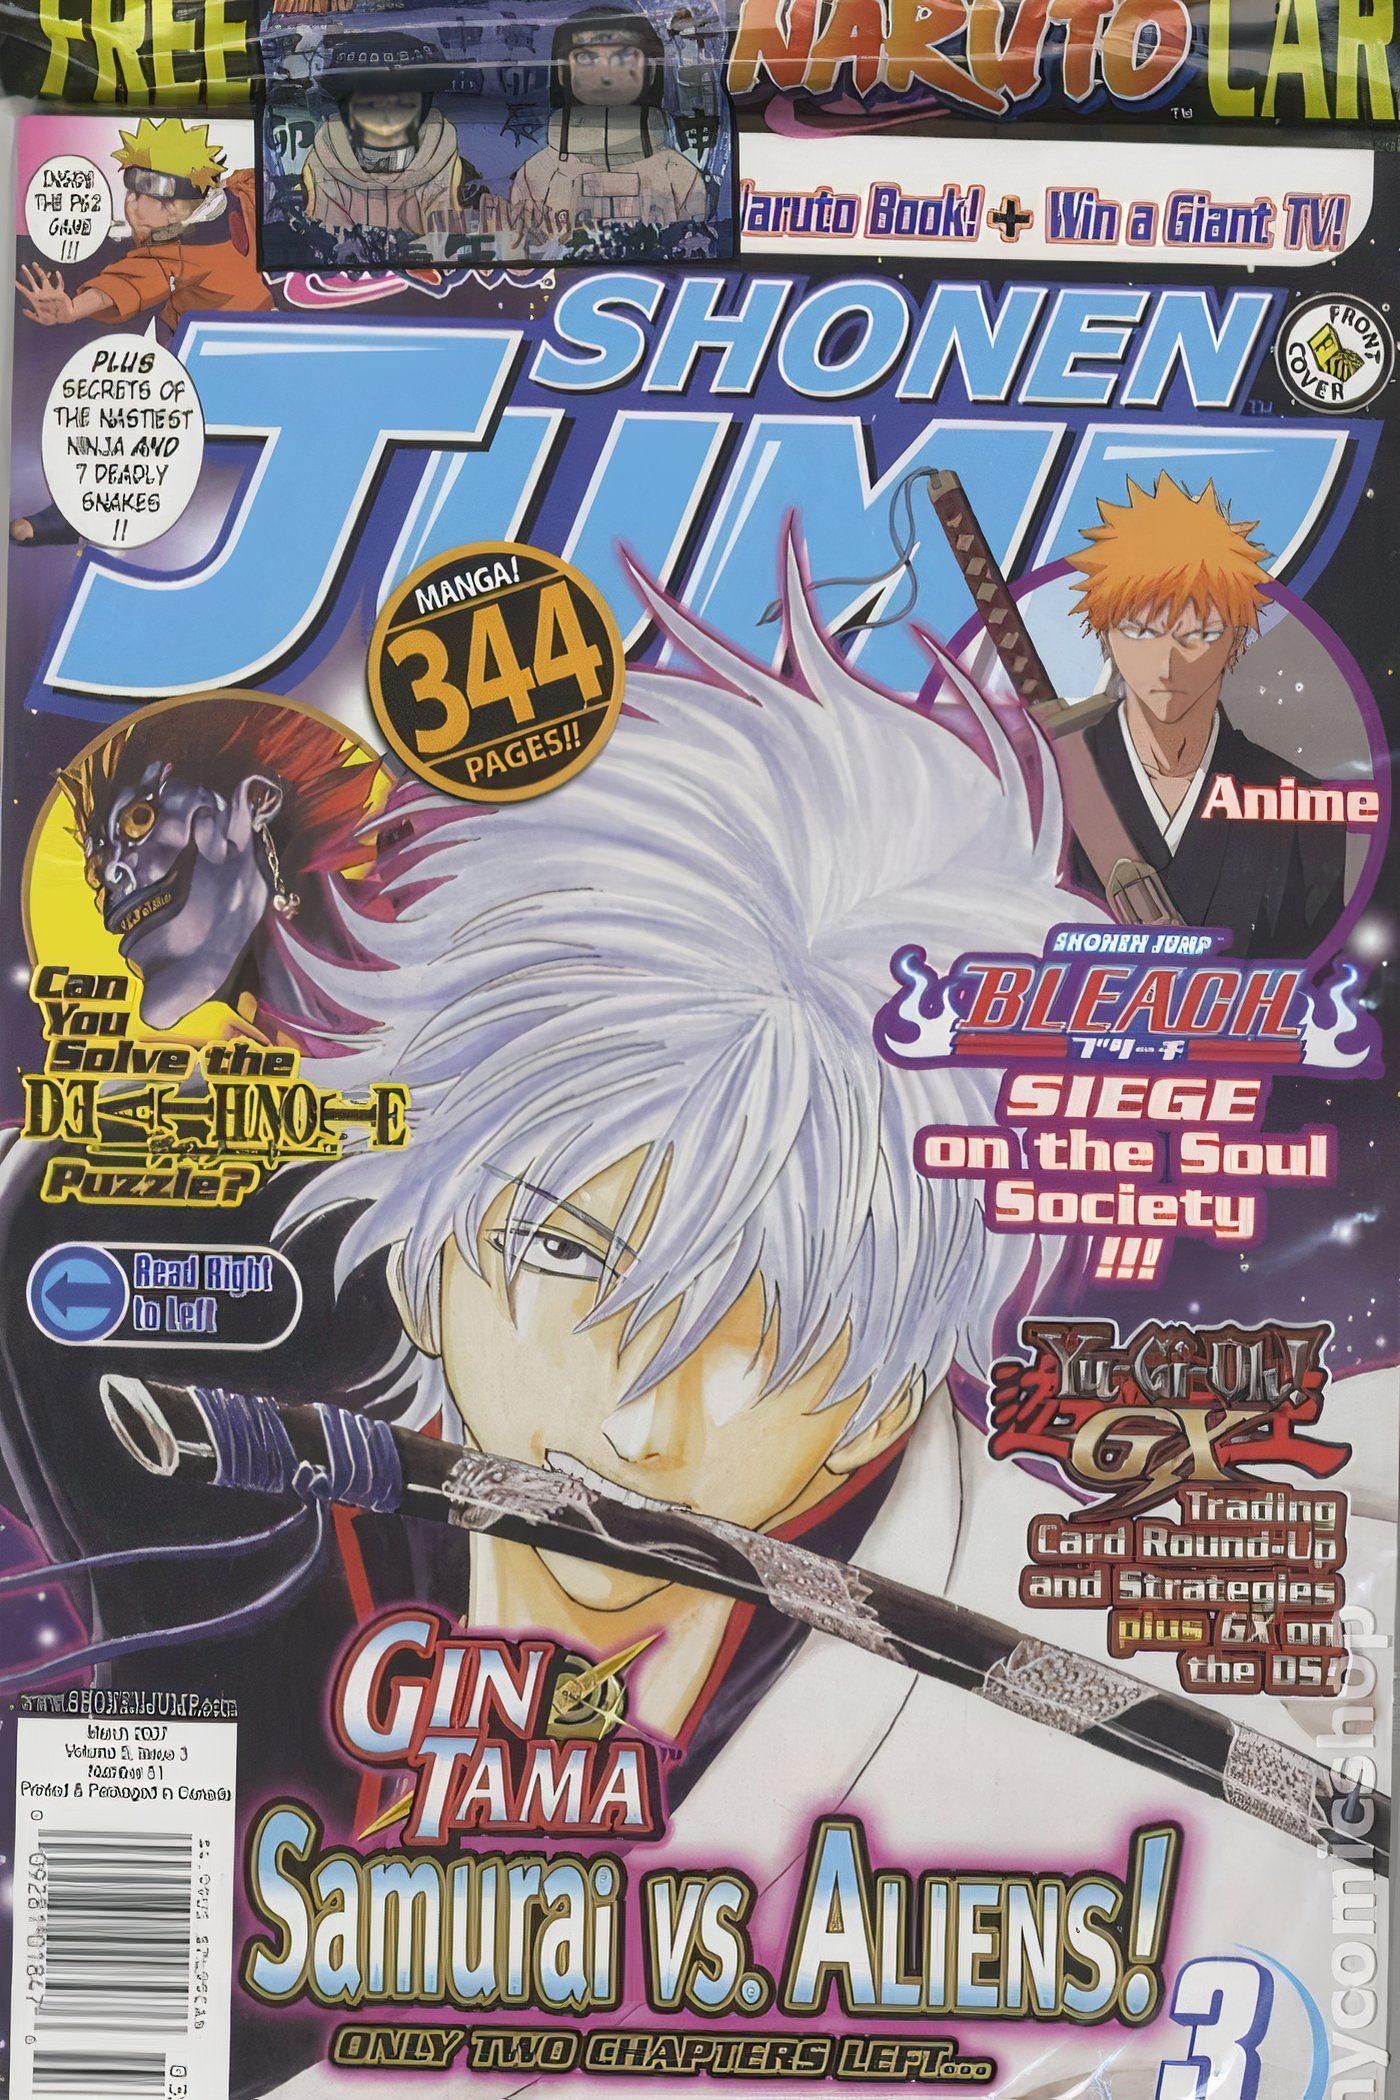 American Weekly Shonen Jump 51 featuring Gintoki from Gintama 